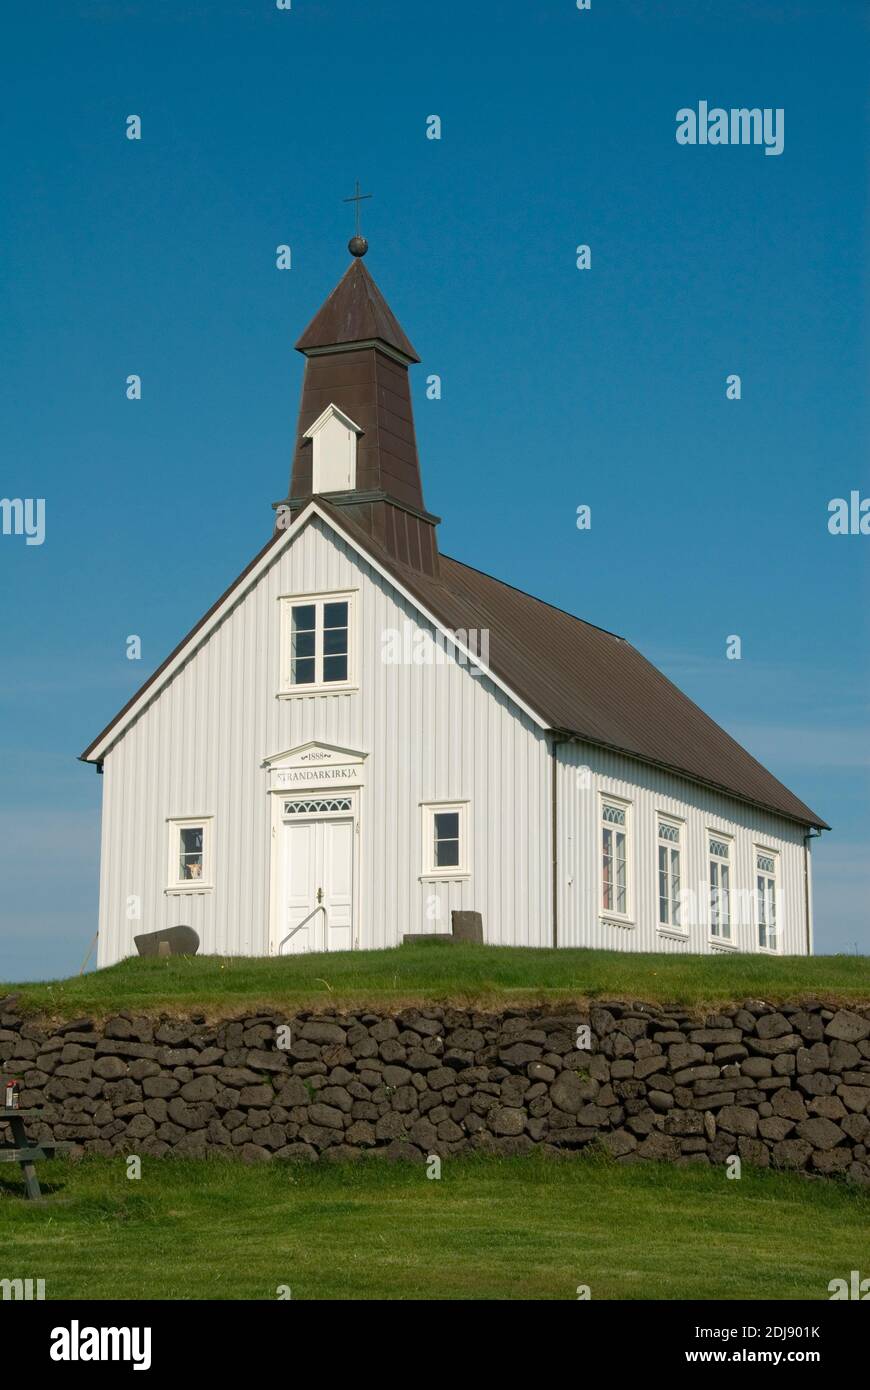 Europa, Island, Iceland, Reykjanes Halbinsel, Kirche, Strandarkirkja, Kirche der Seeleute, Strandkirche Stock Photo